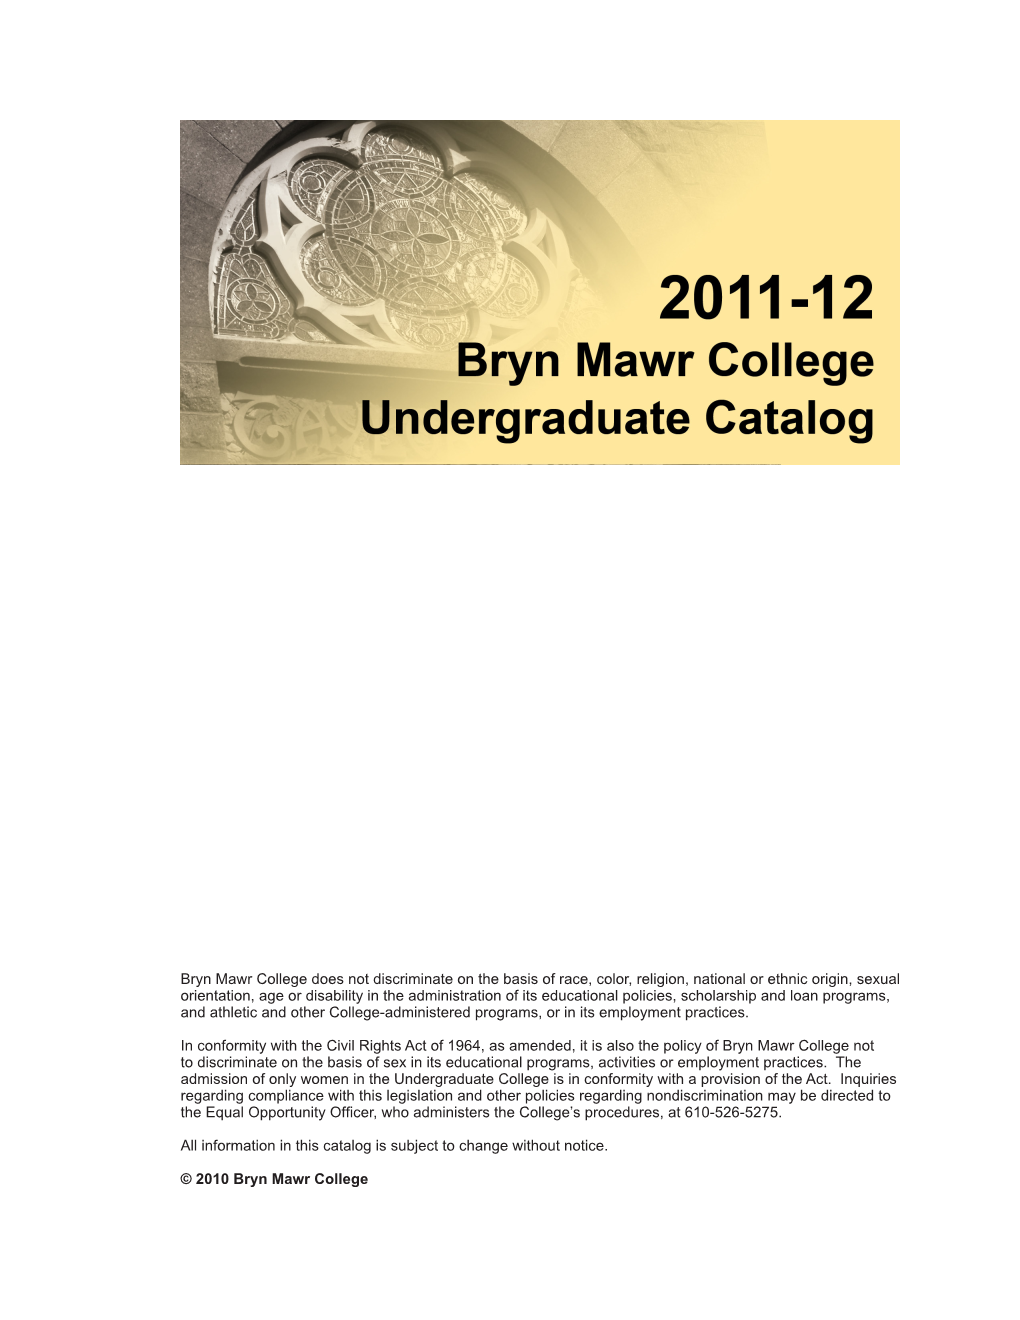 2011-12 Bryn Mawr College Undergraduate Catalog